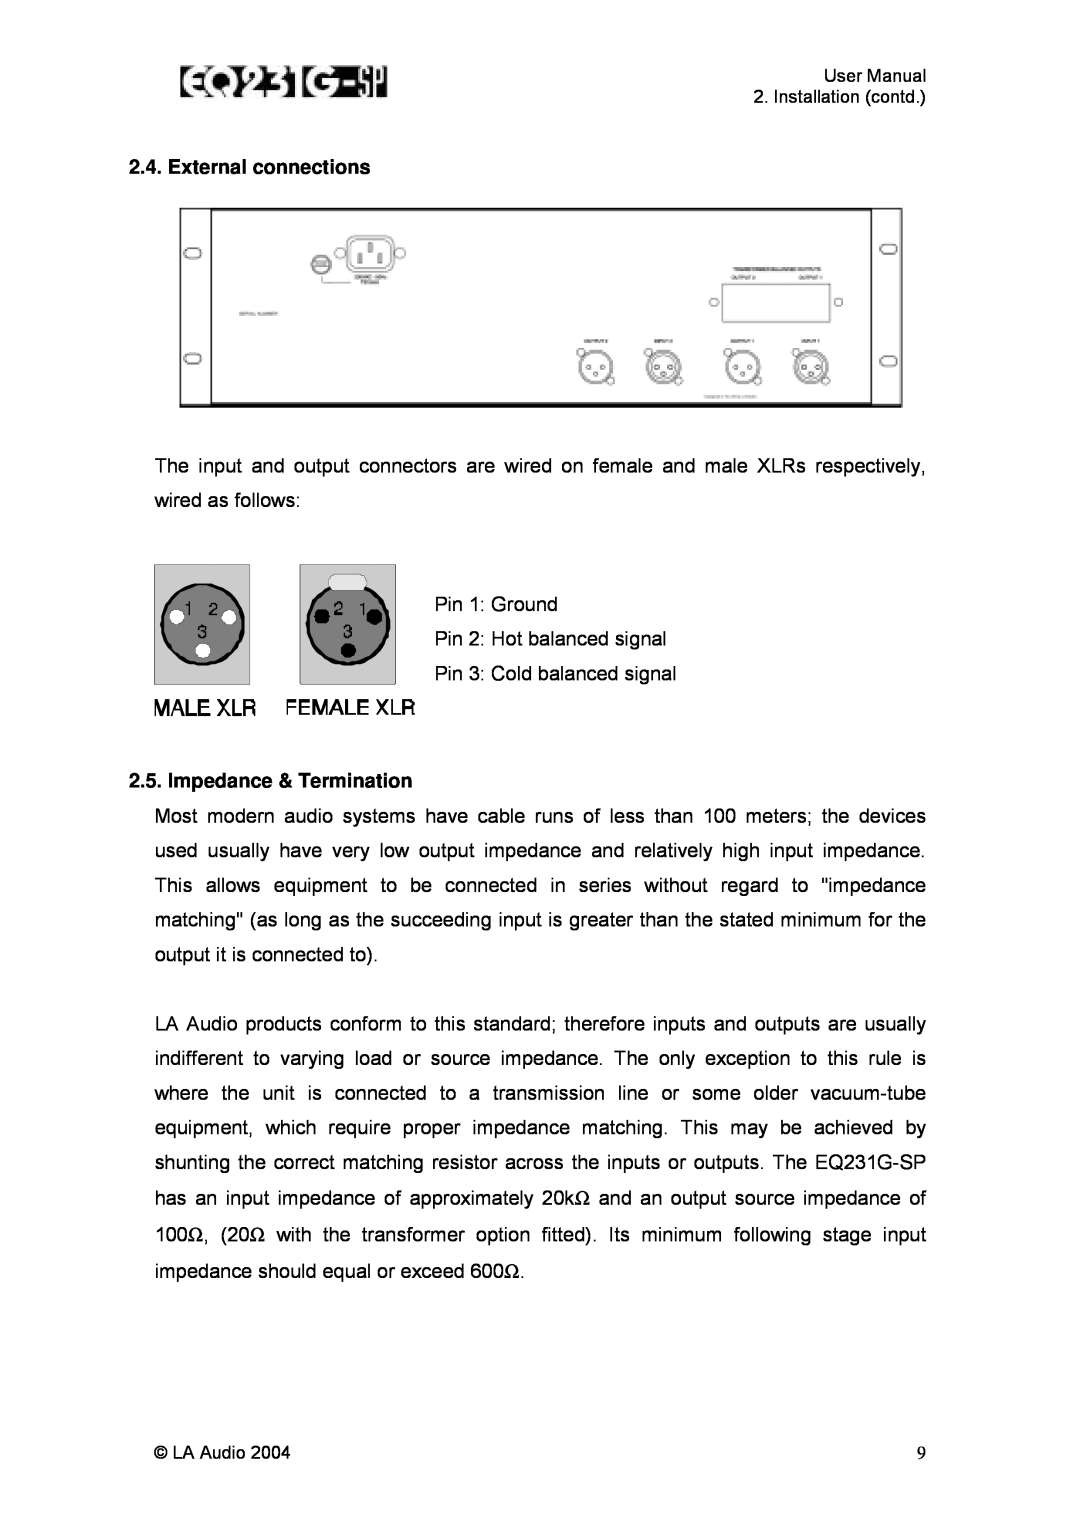 LA Audio Electronic EQ231G-SP user manual External connections, Impedance & Termination 